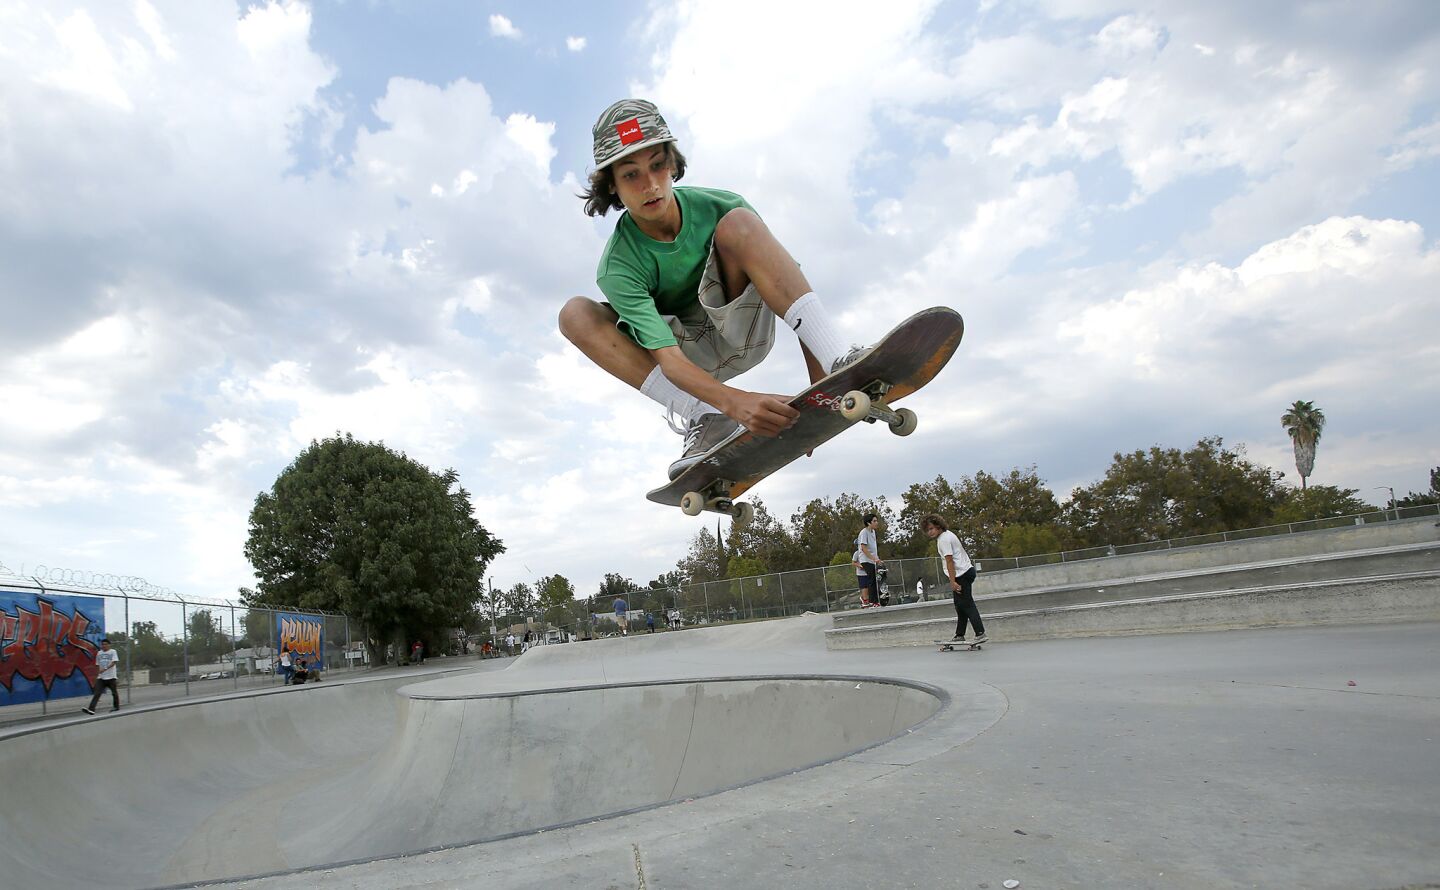 Max Badder soars high in the heat at the Van Nuys Pedlow Skate Park.